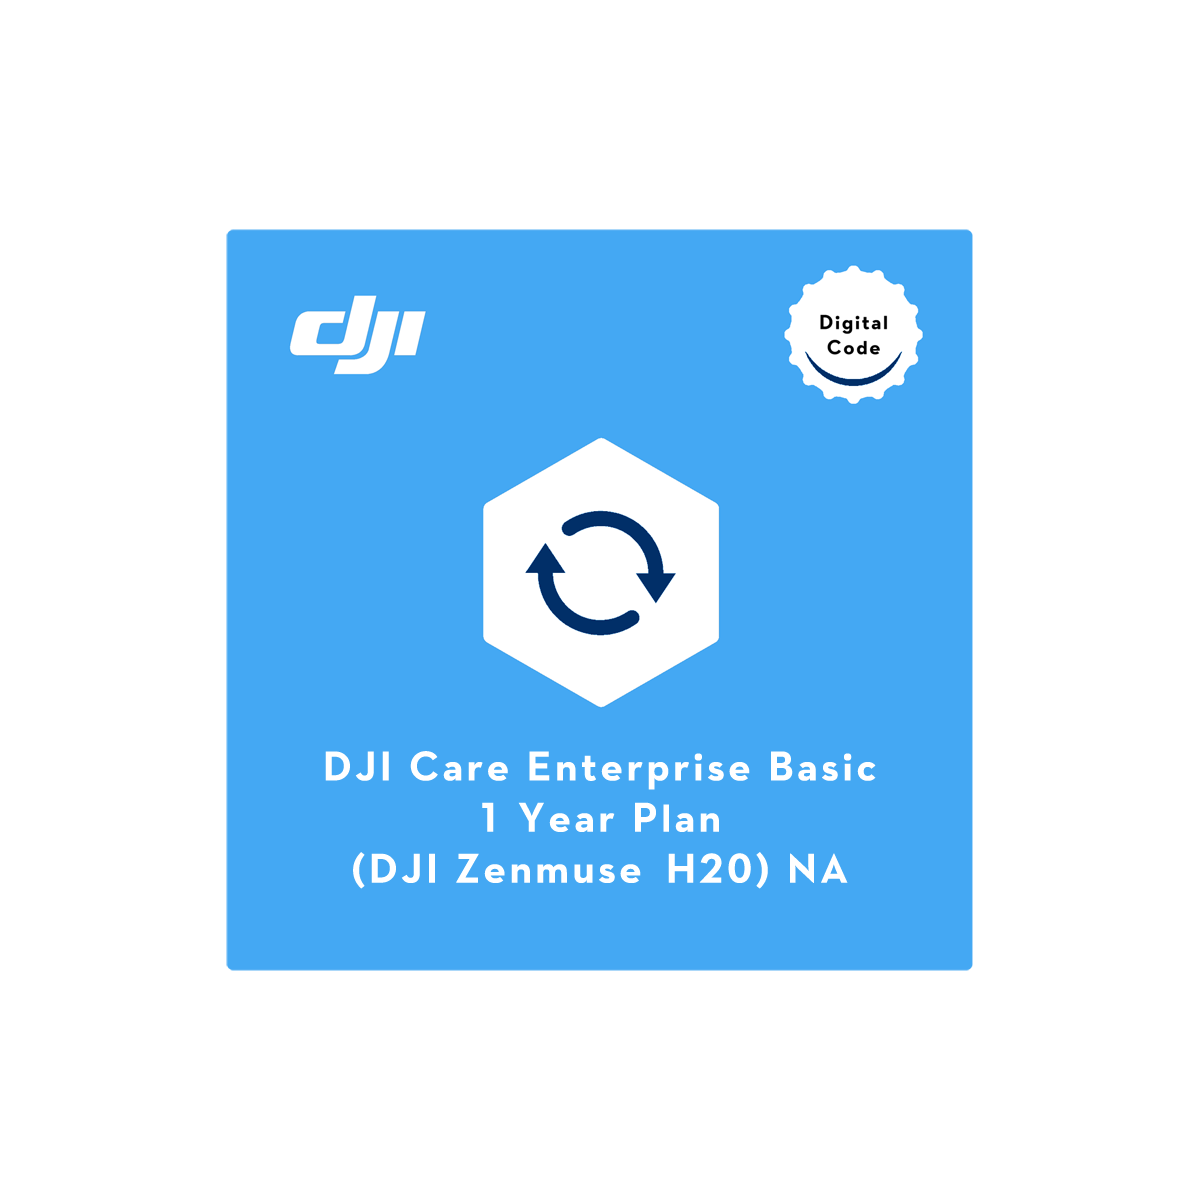 DJI Care Enterprise Basic (Zenmuse H20) NA